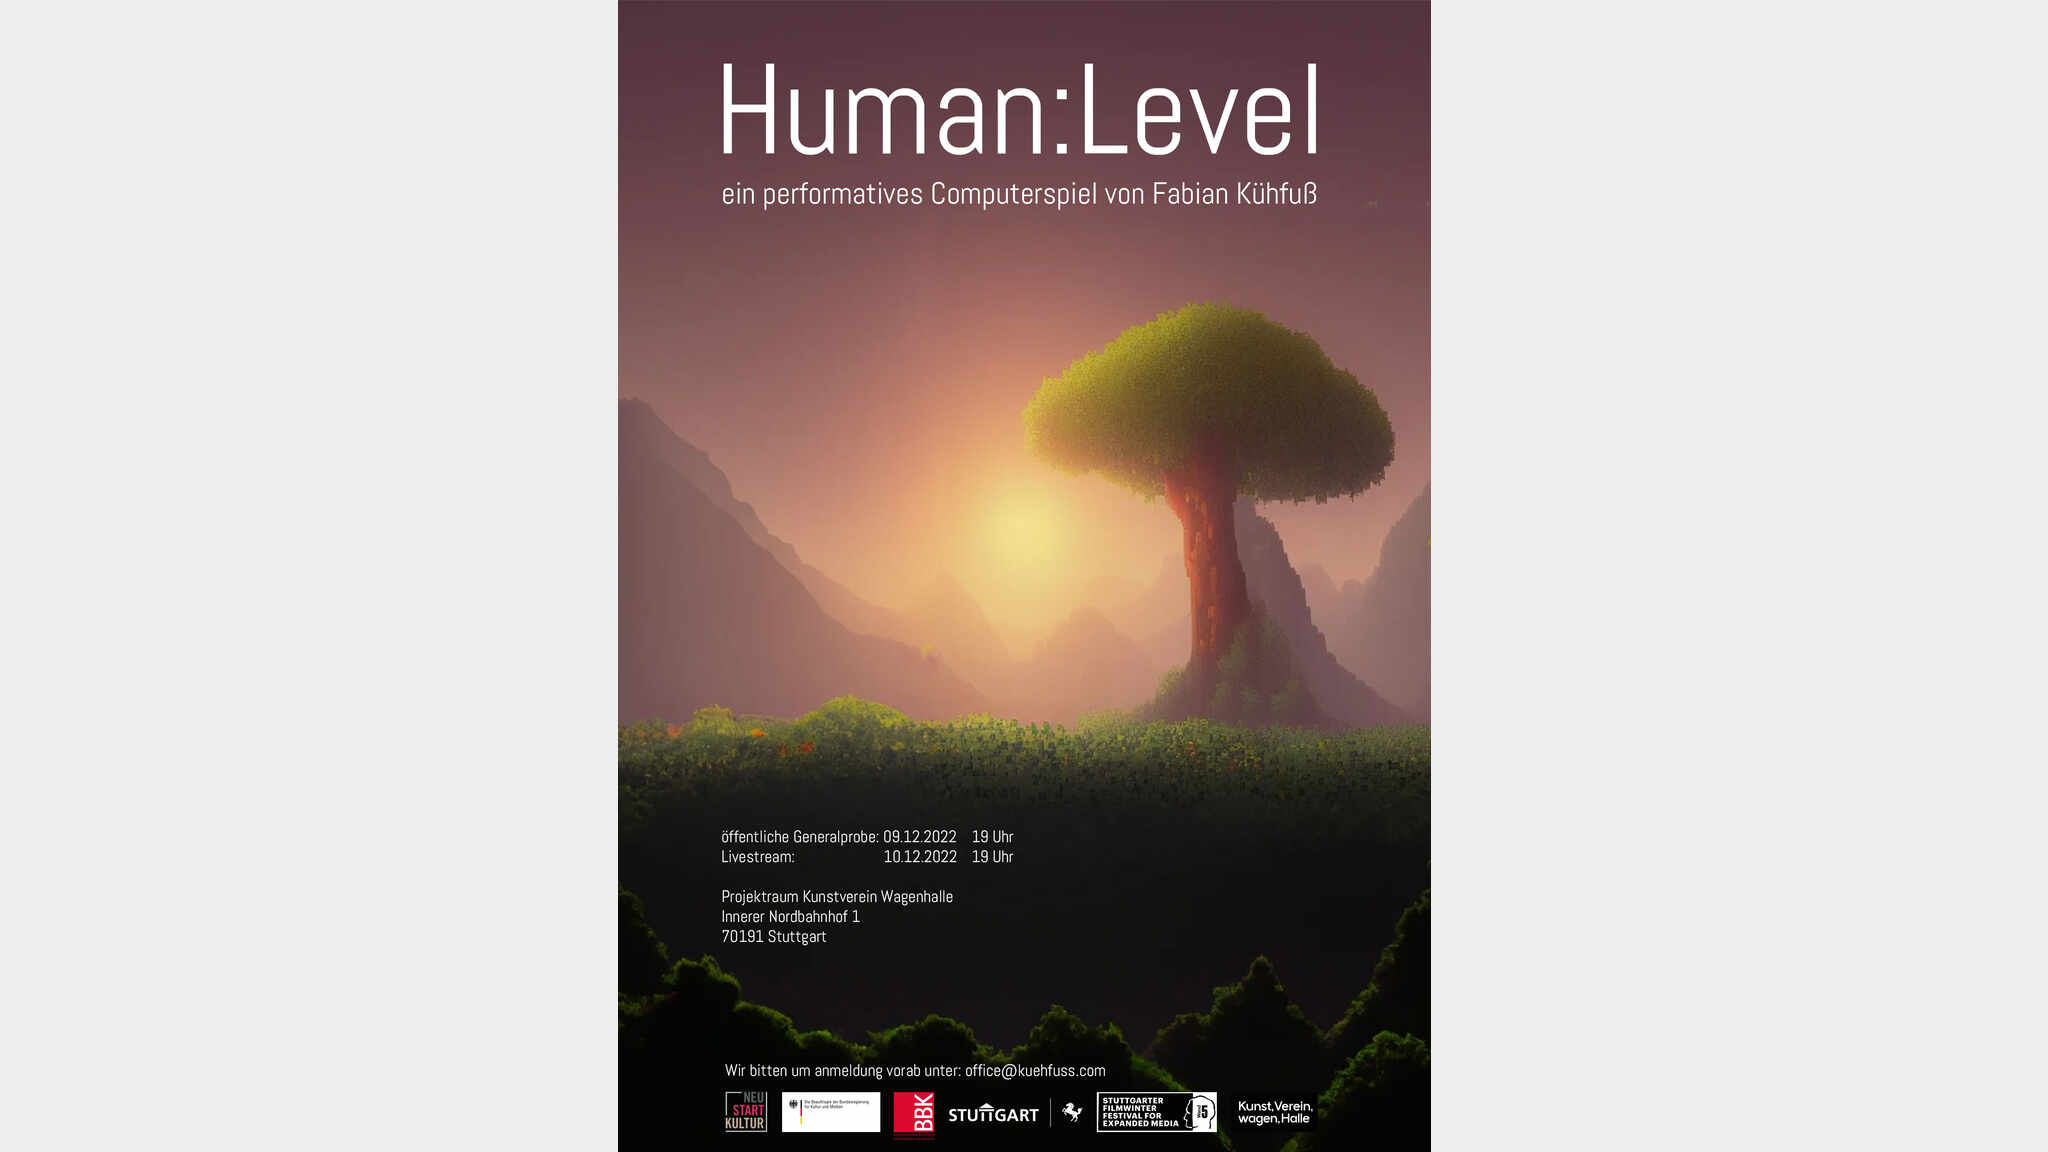 Human:Level